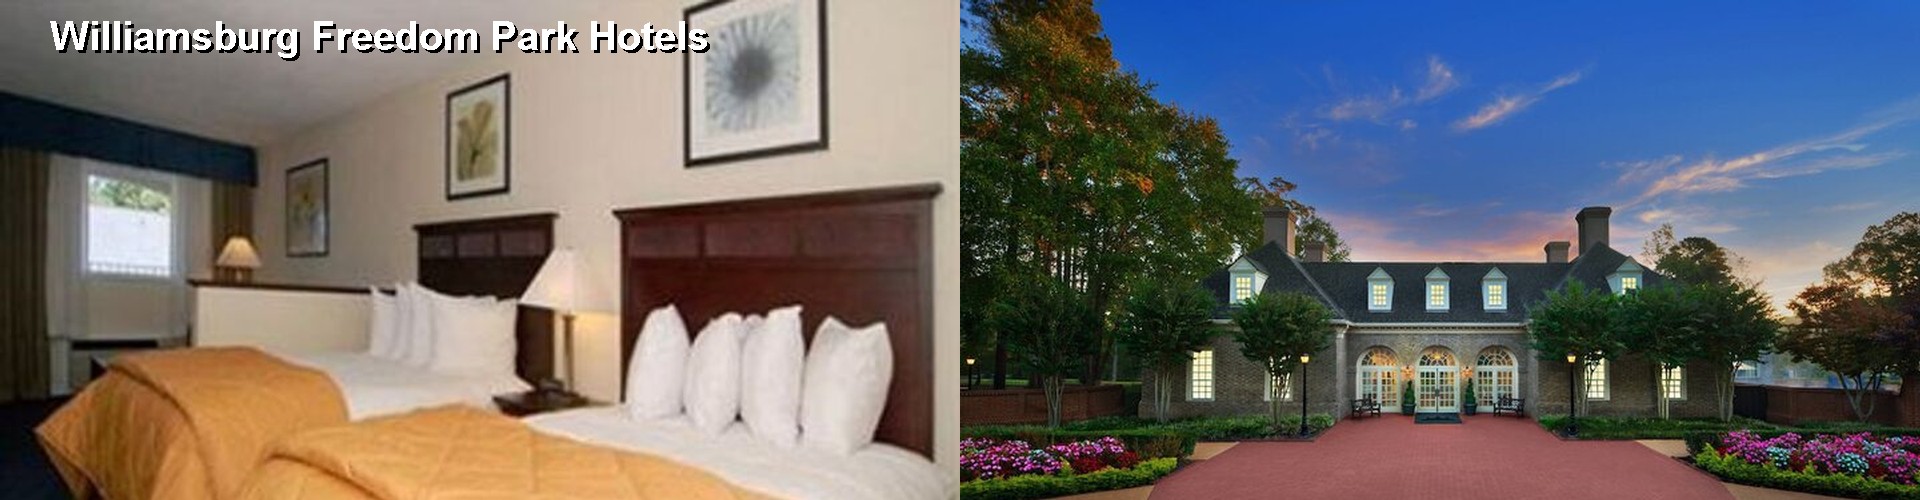 4 Best Hotels near Williamsburg Freedom Park